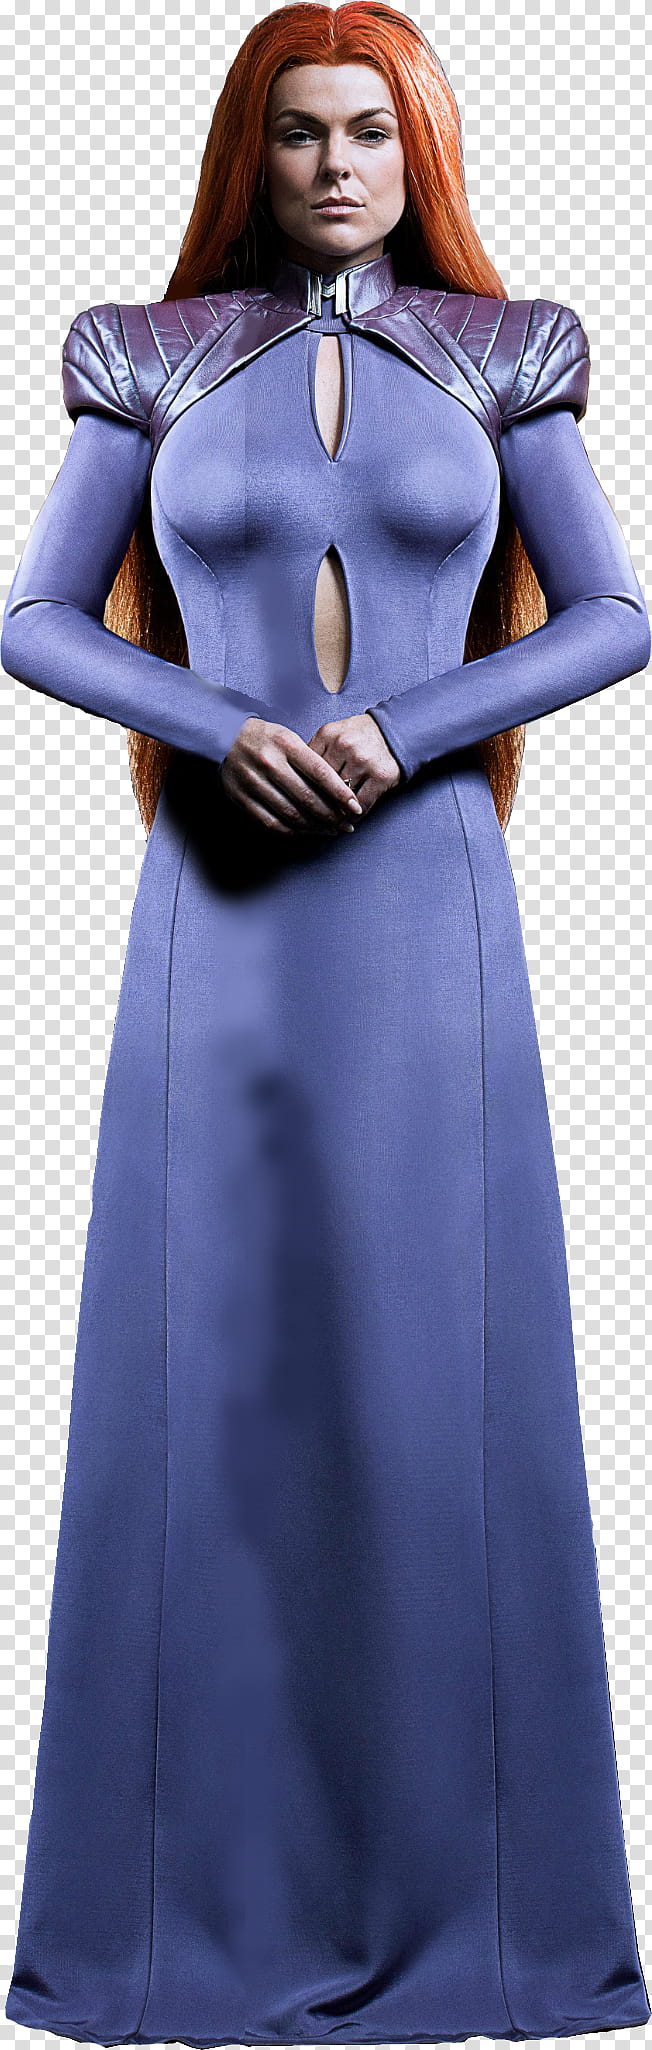 Marvel Inhumans Medusa, woman in blue dress character transparent background PNG clipart